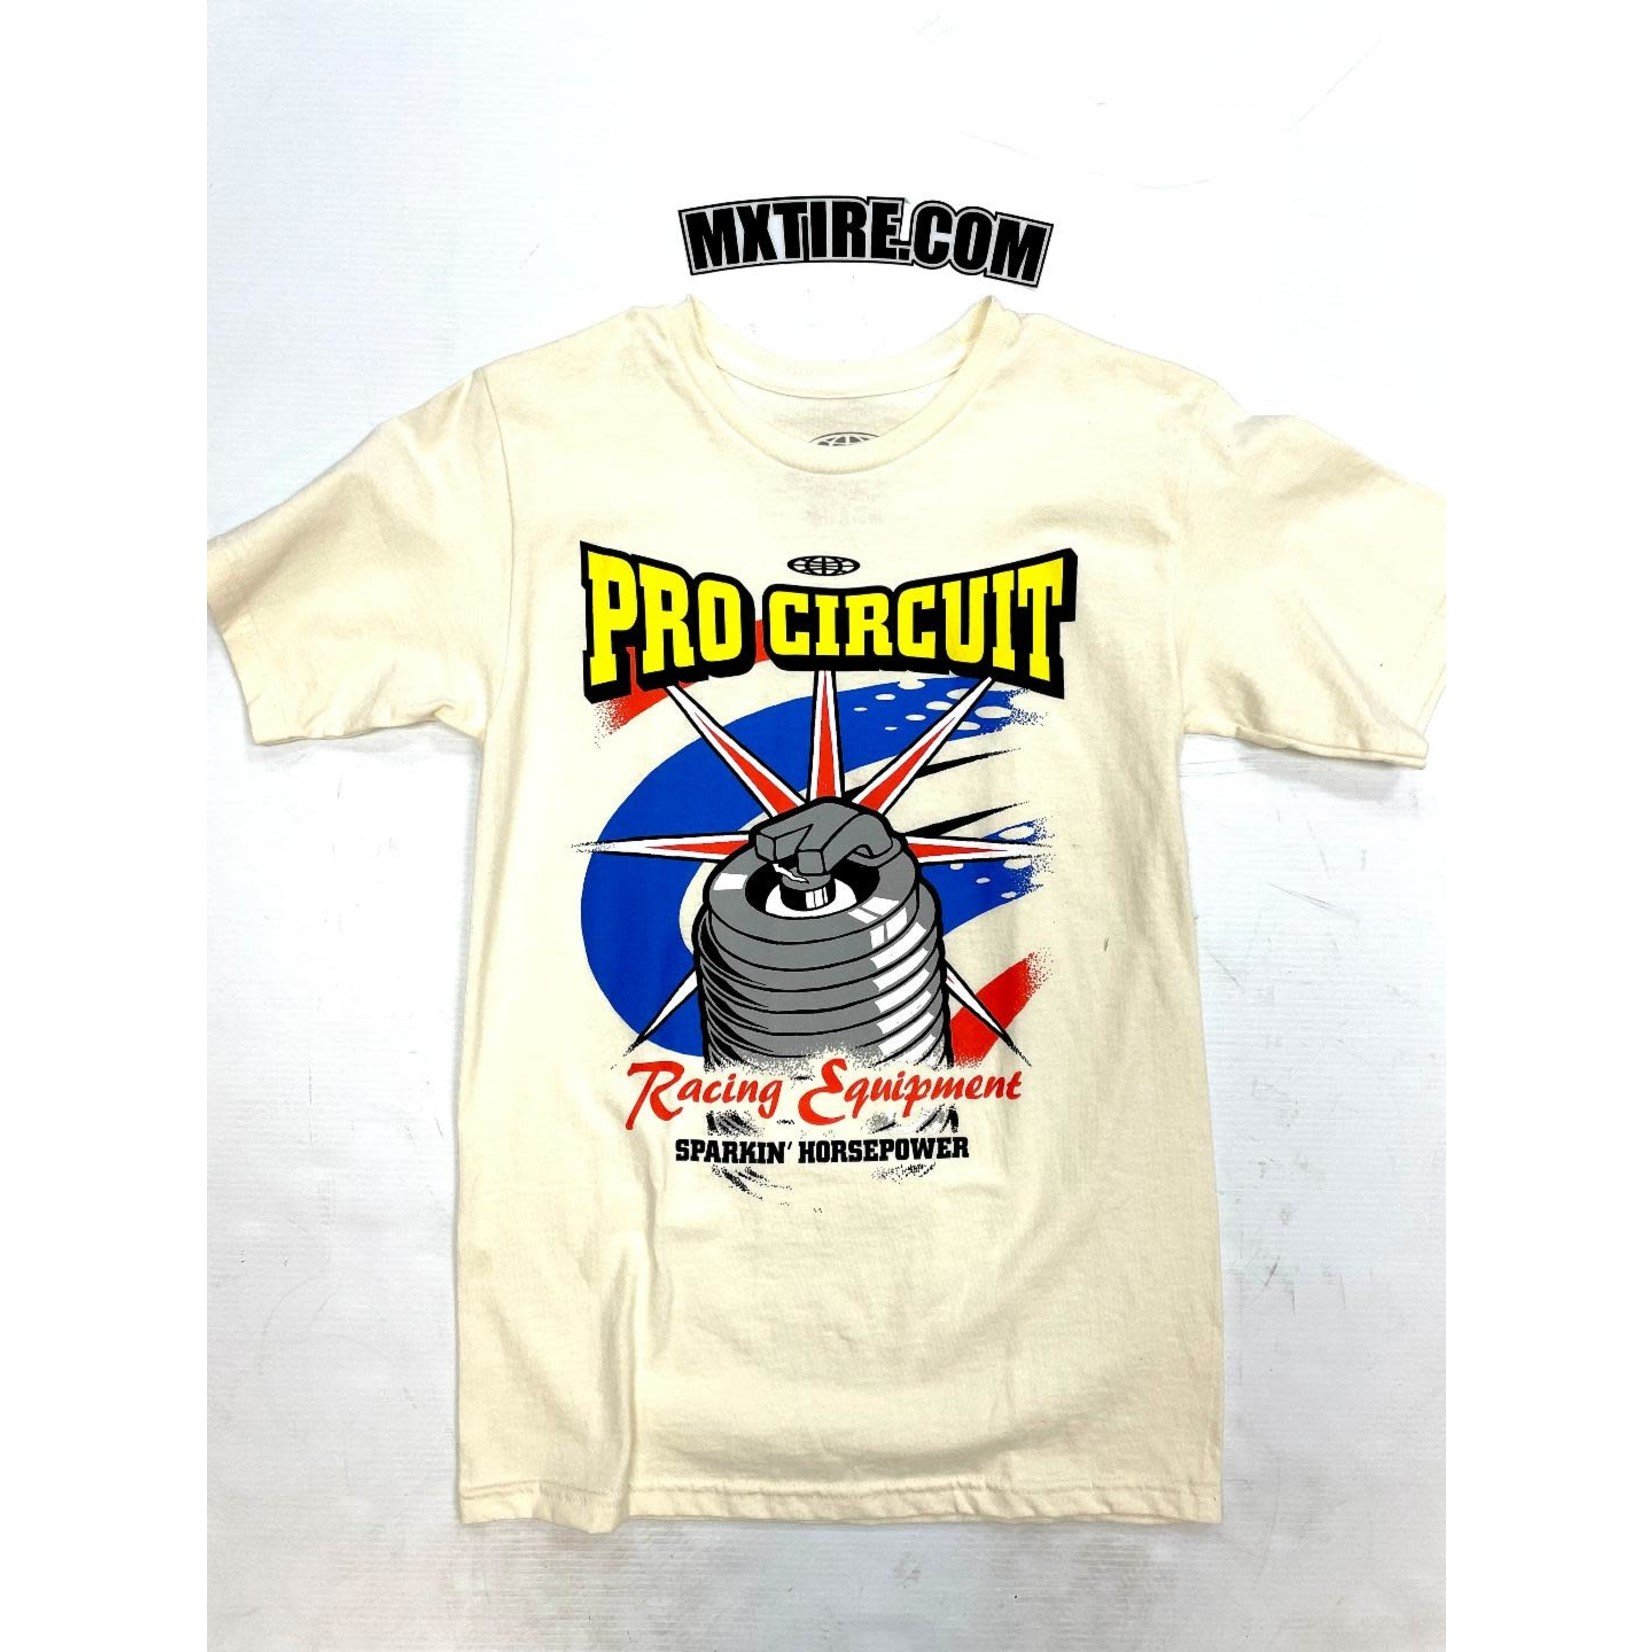 PRO CIRCUIT Racing Equipment Tee, Cream